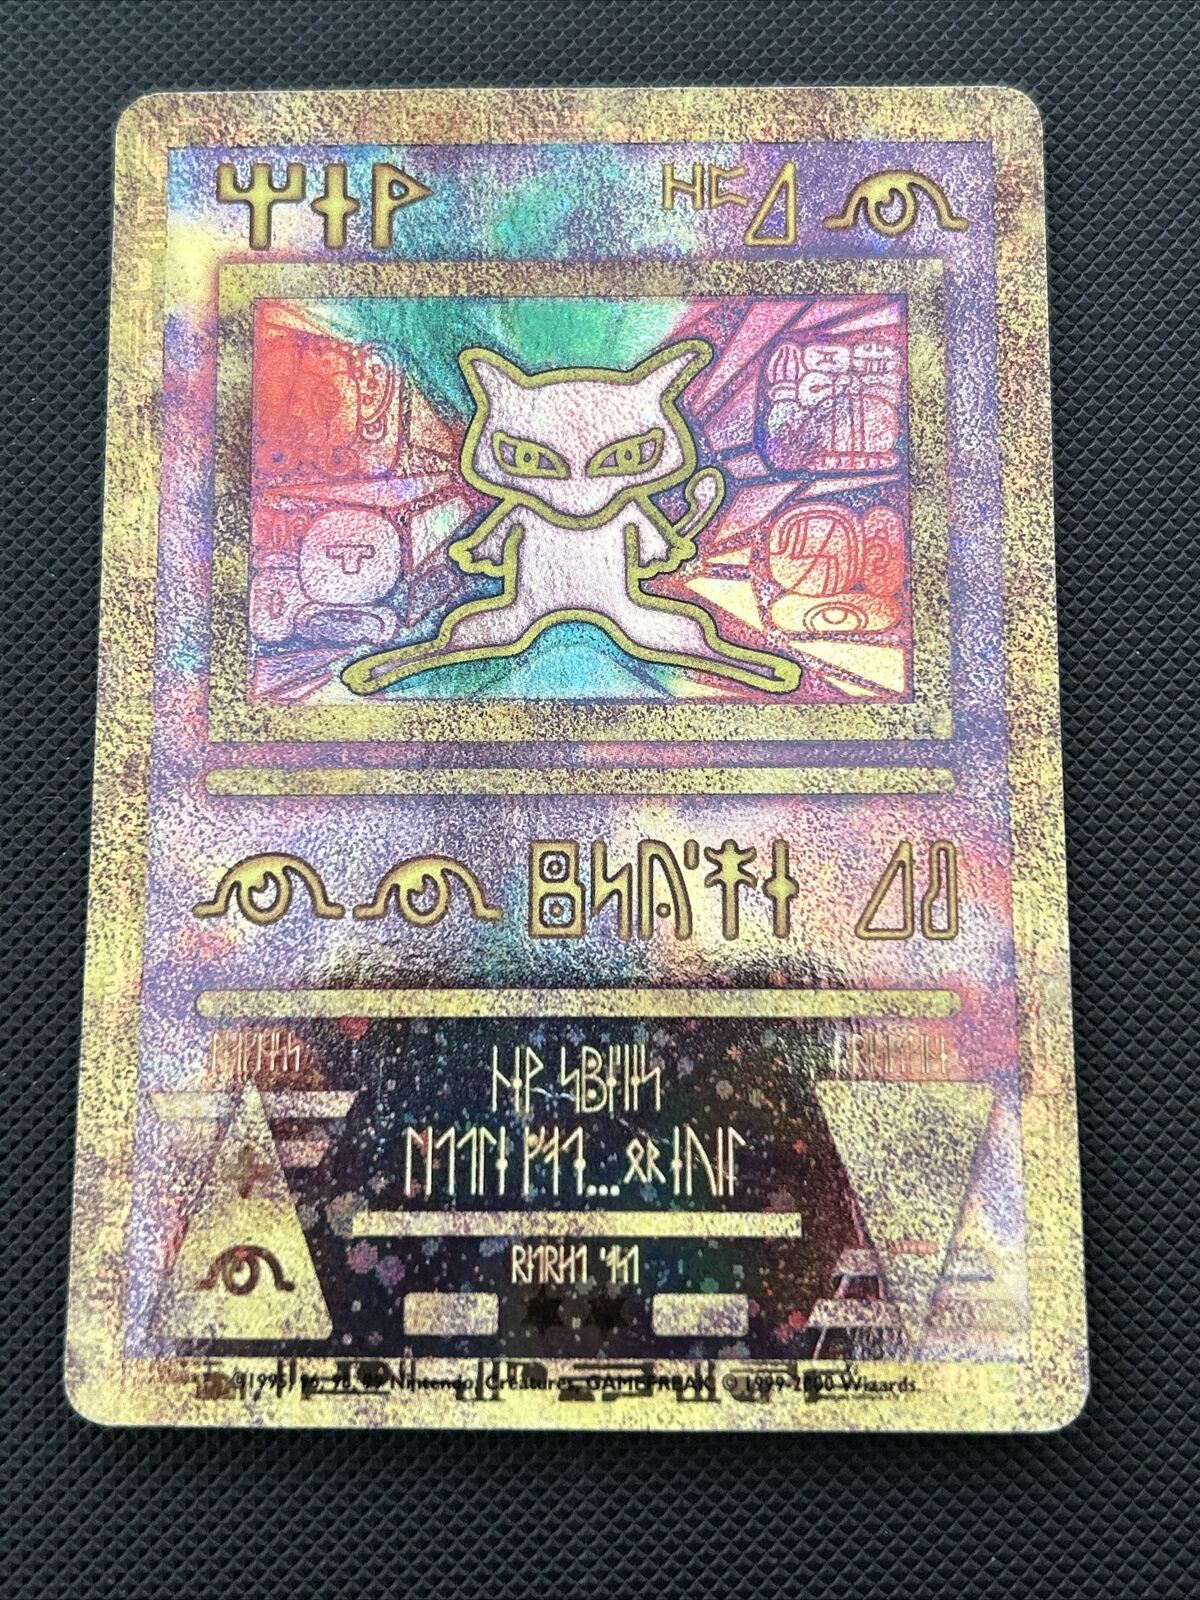 Pokémon Ancient Mew Holographic Card (1999-2000) Rare Original -creased